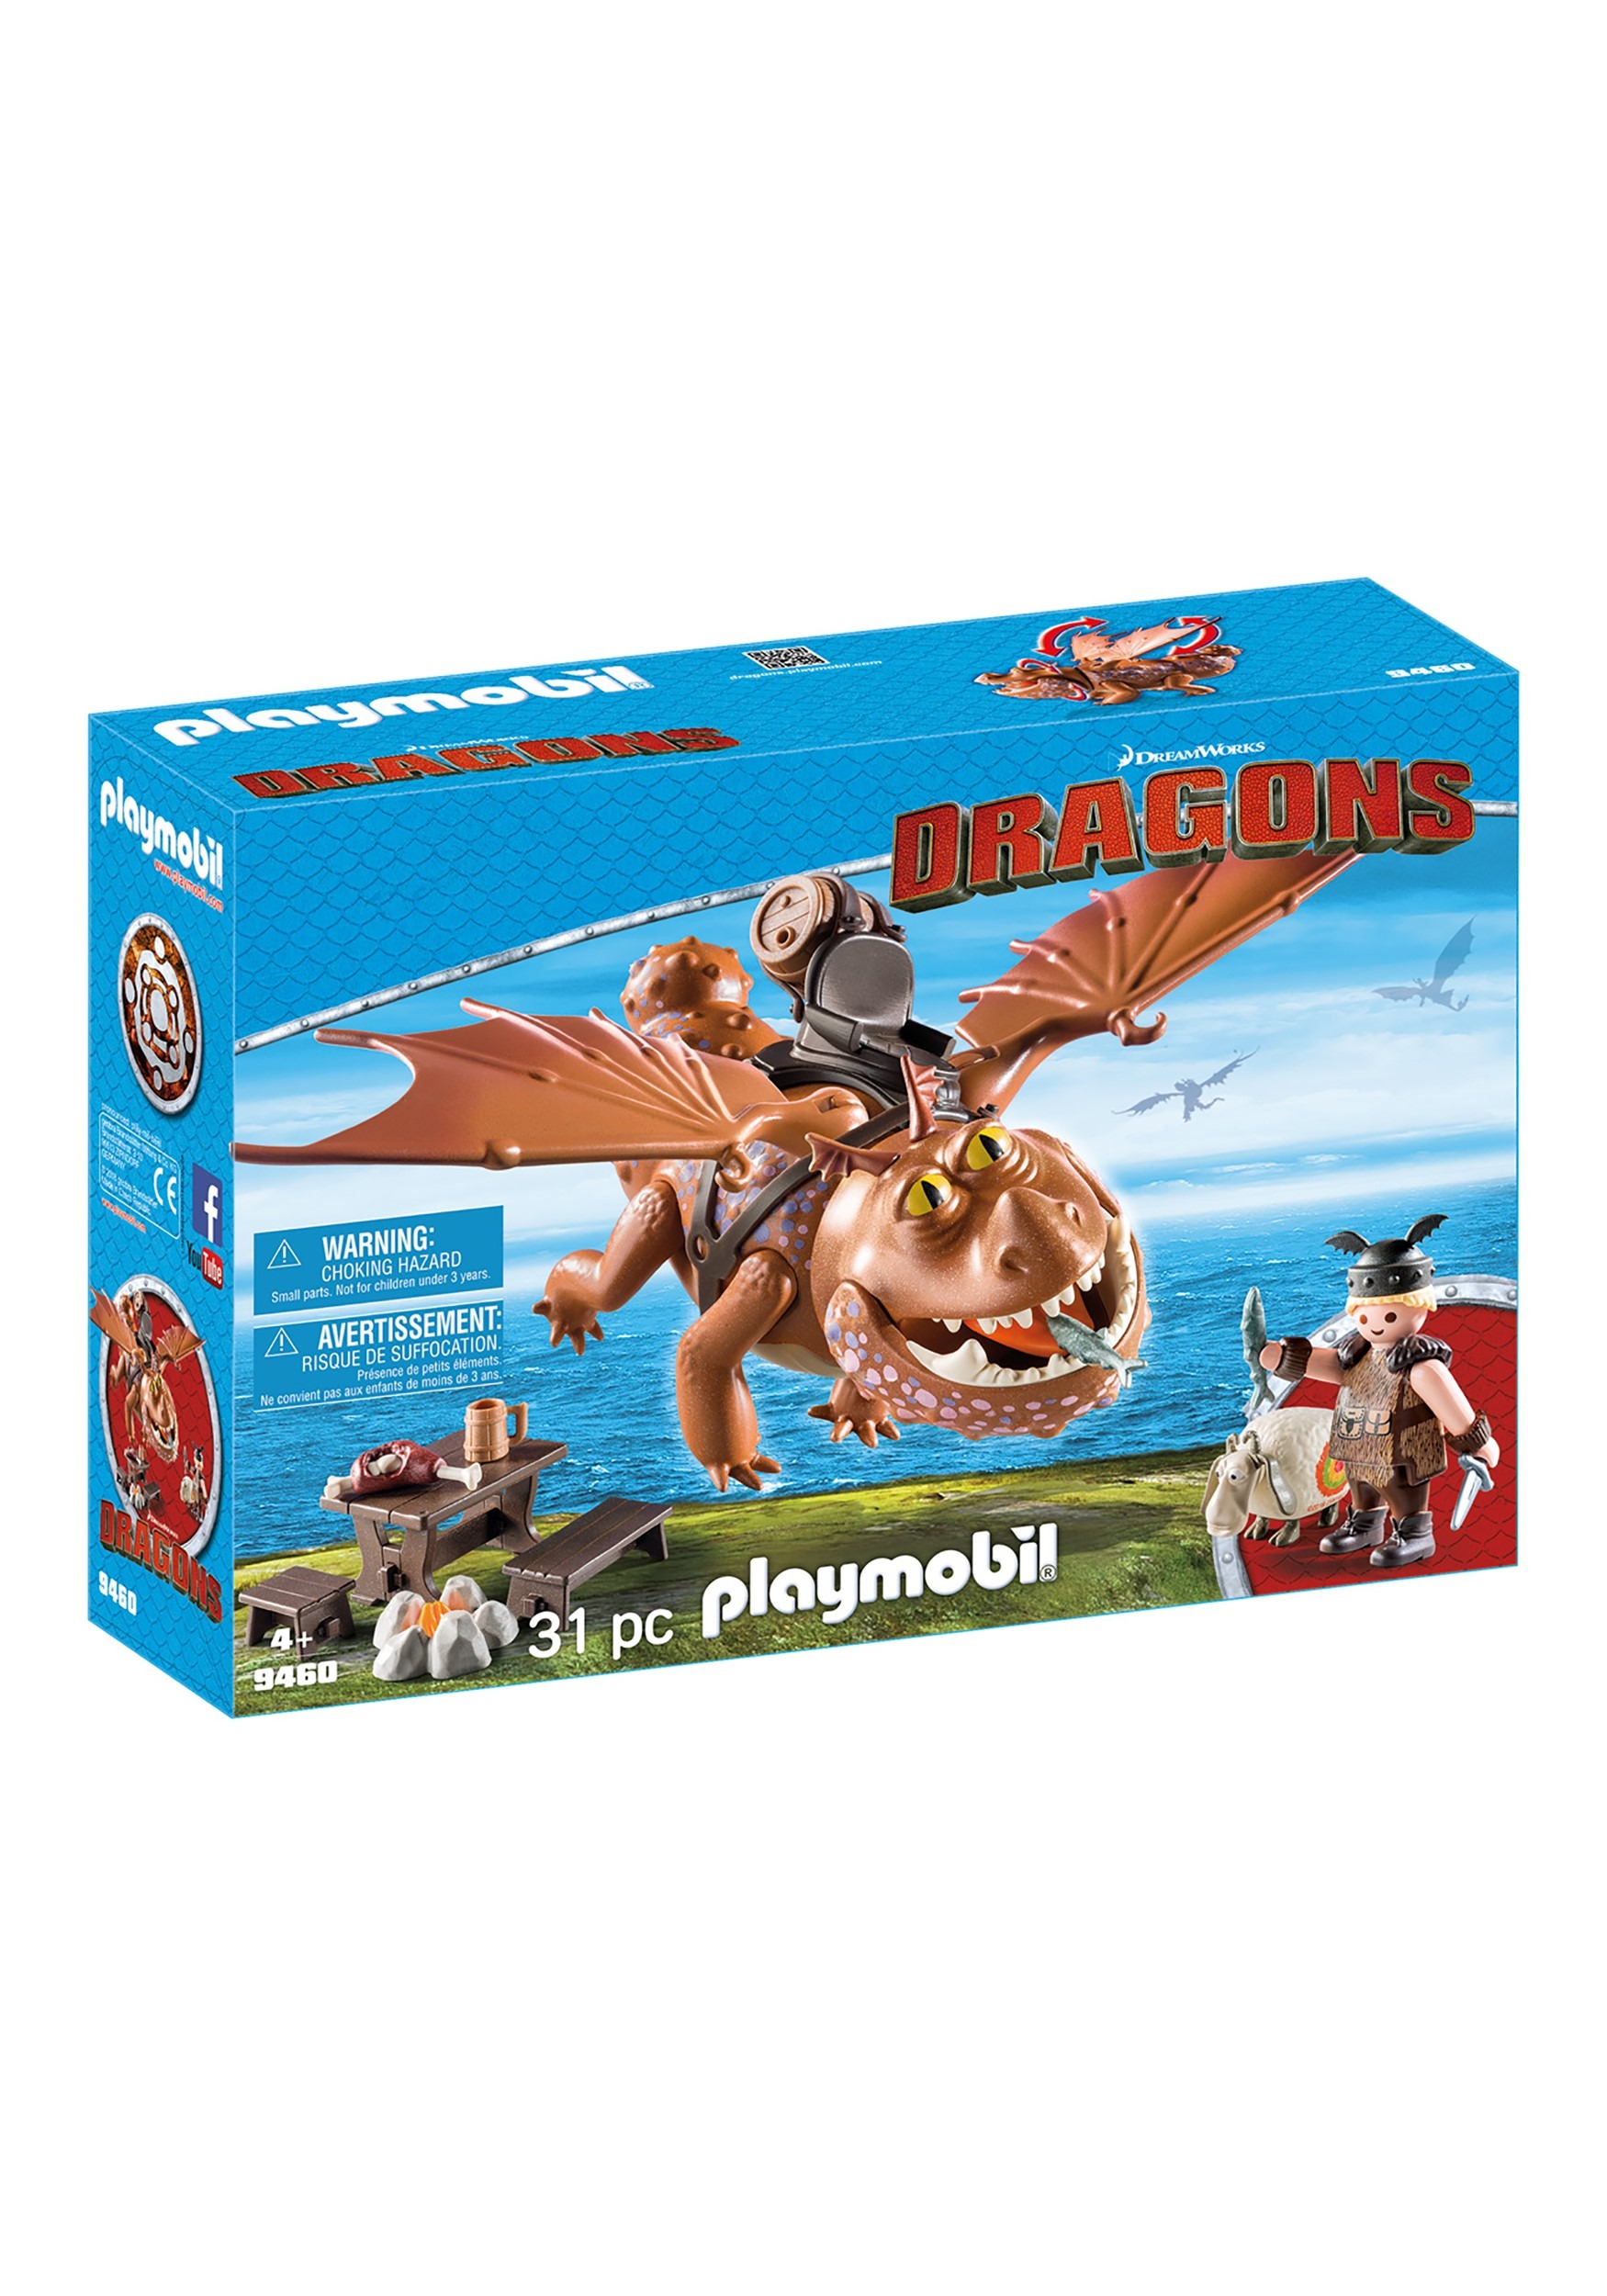 Playmobil How to Train Your Dragon Fishlegs and Meatlug Playset